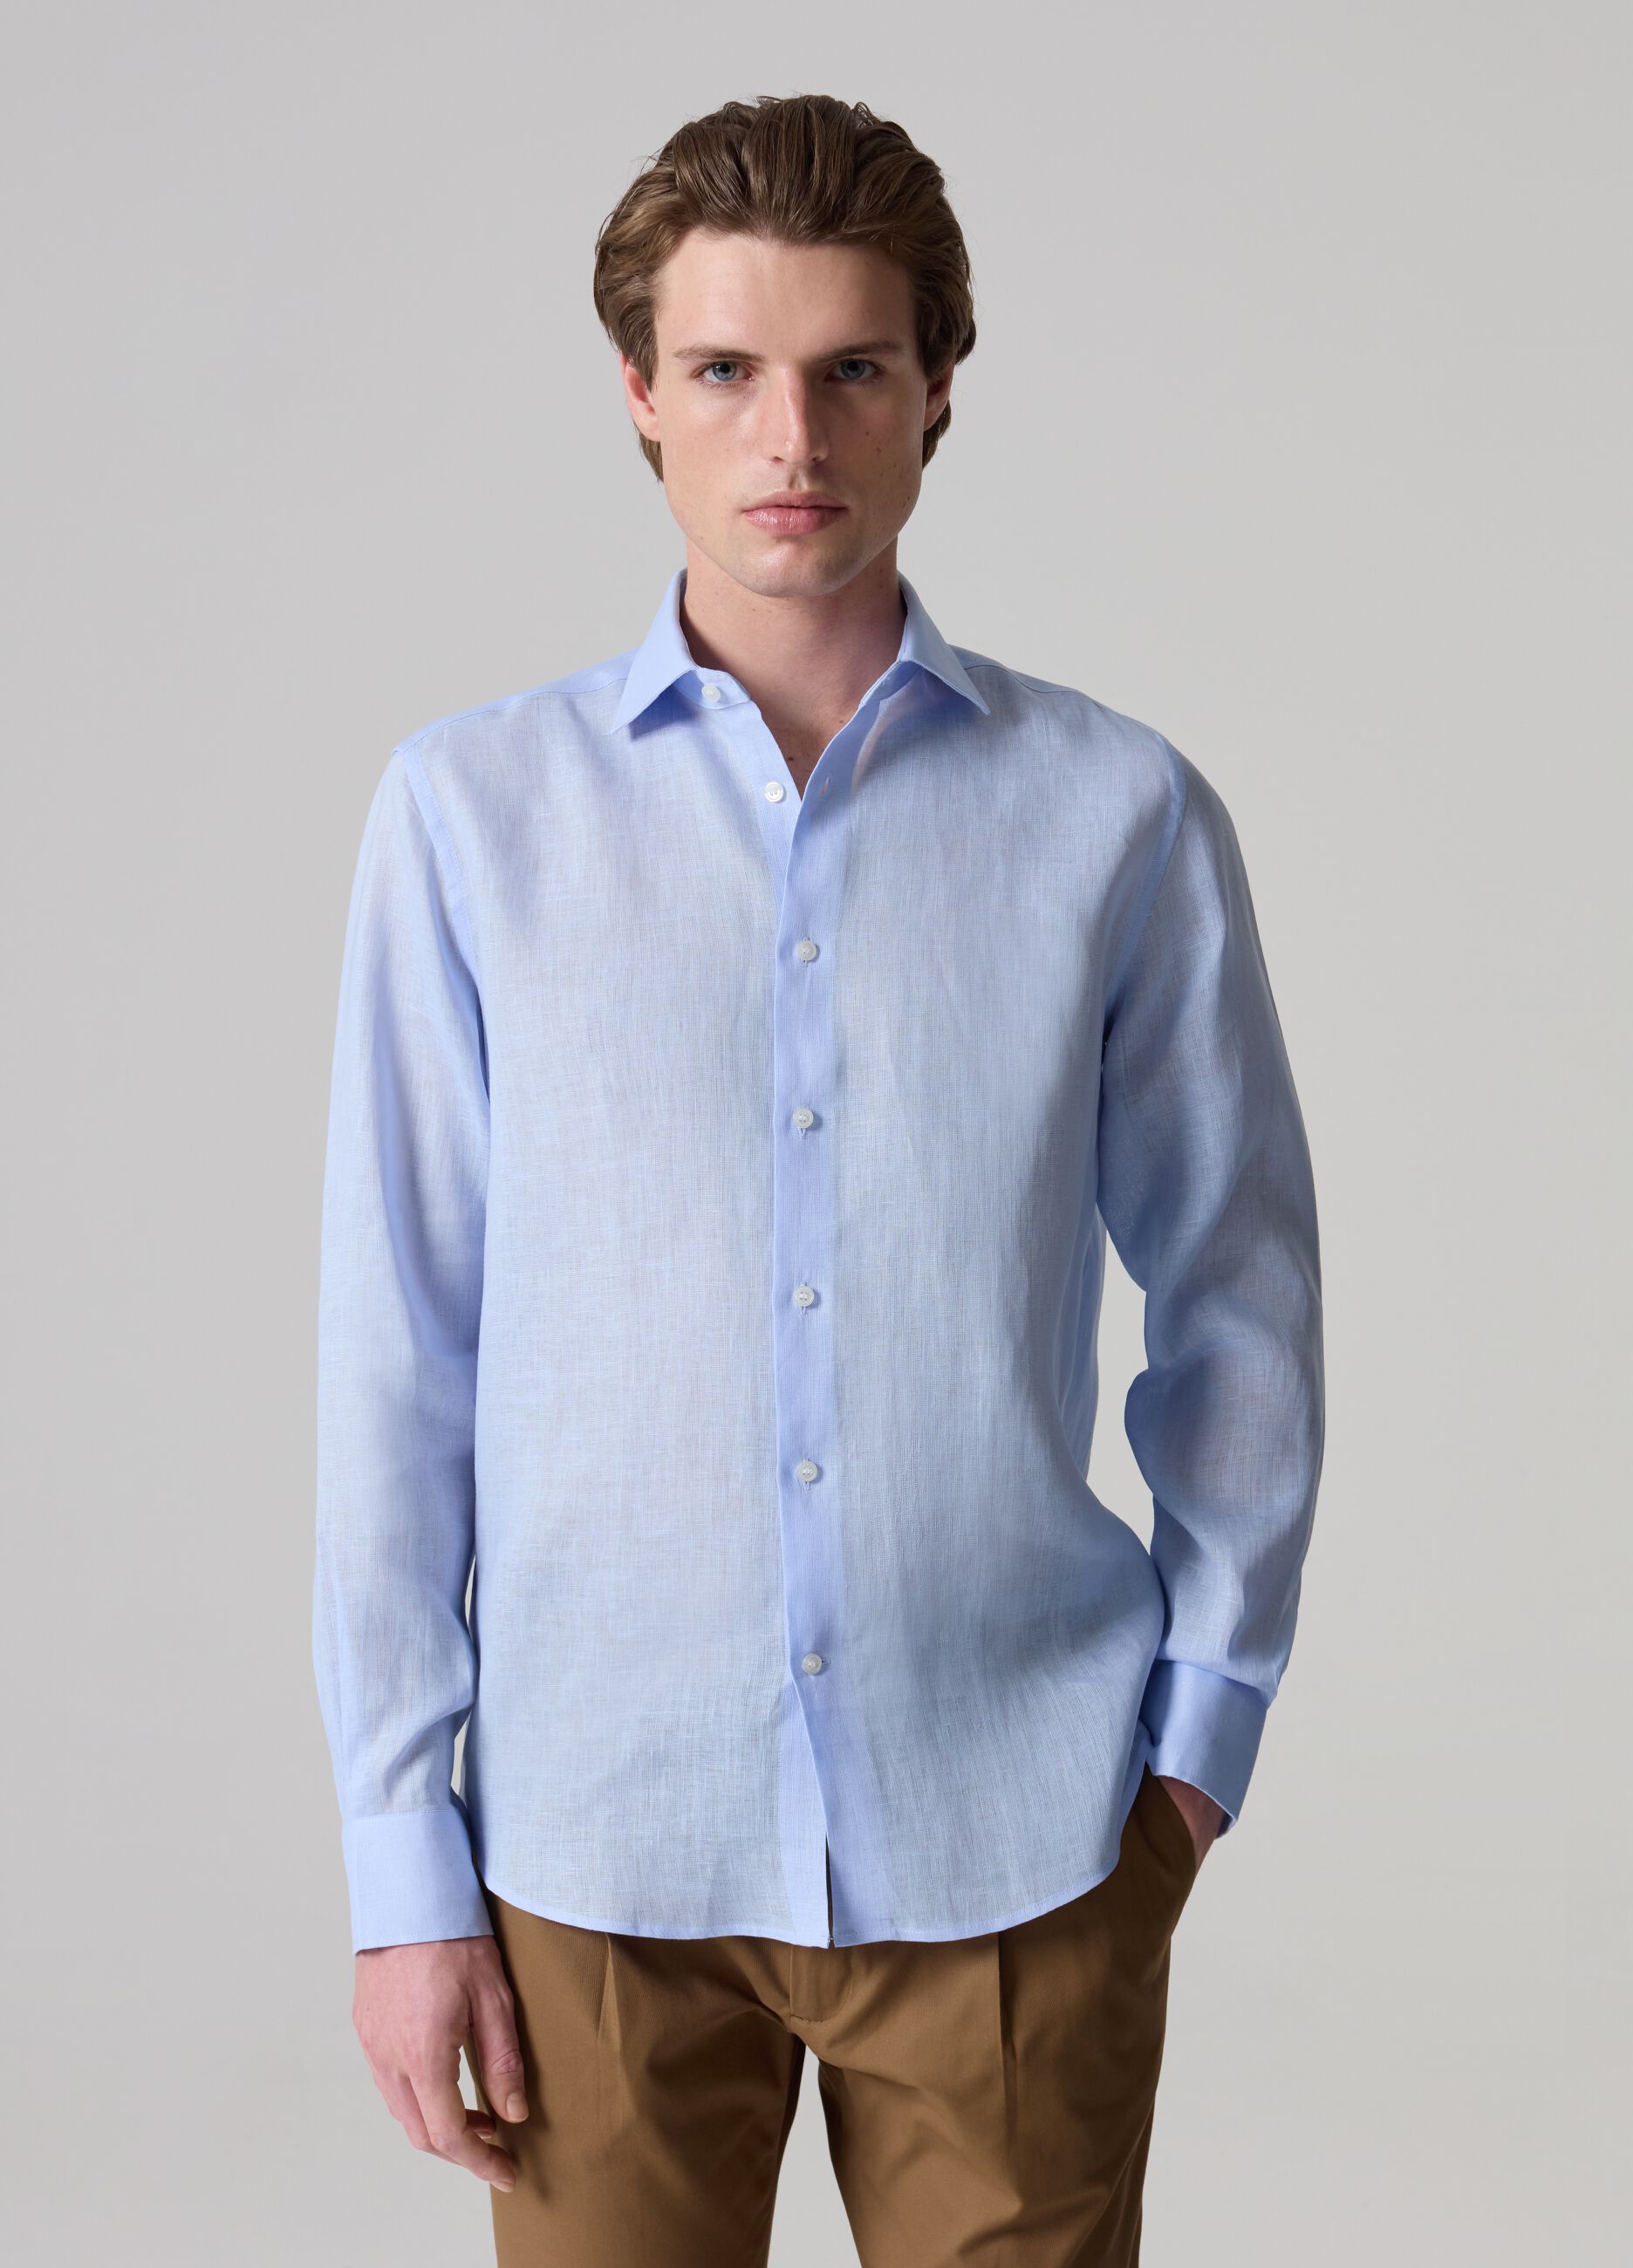 Contemporary shirt in linen